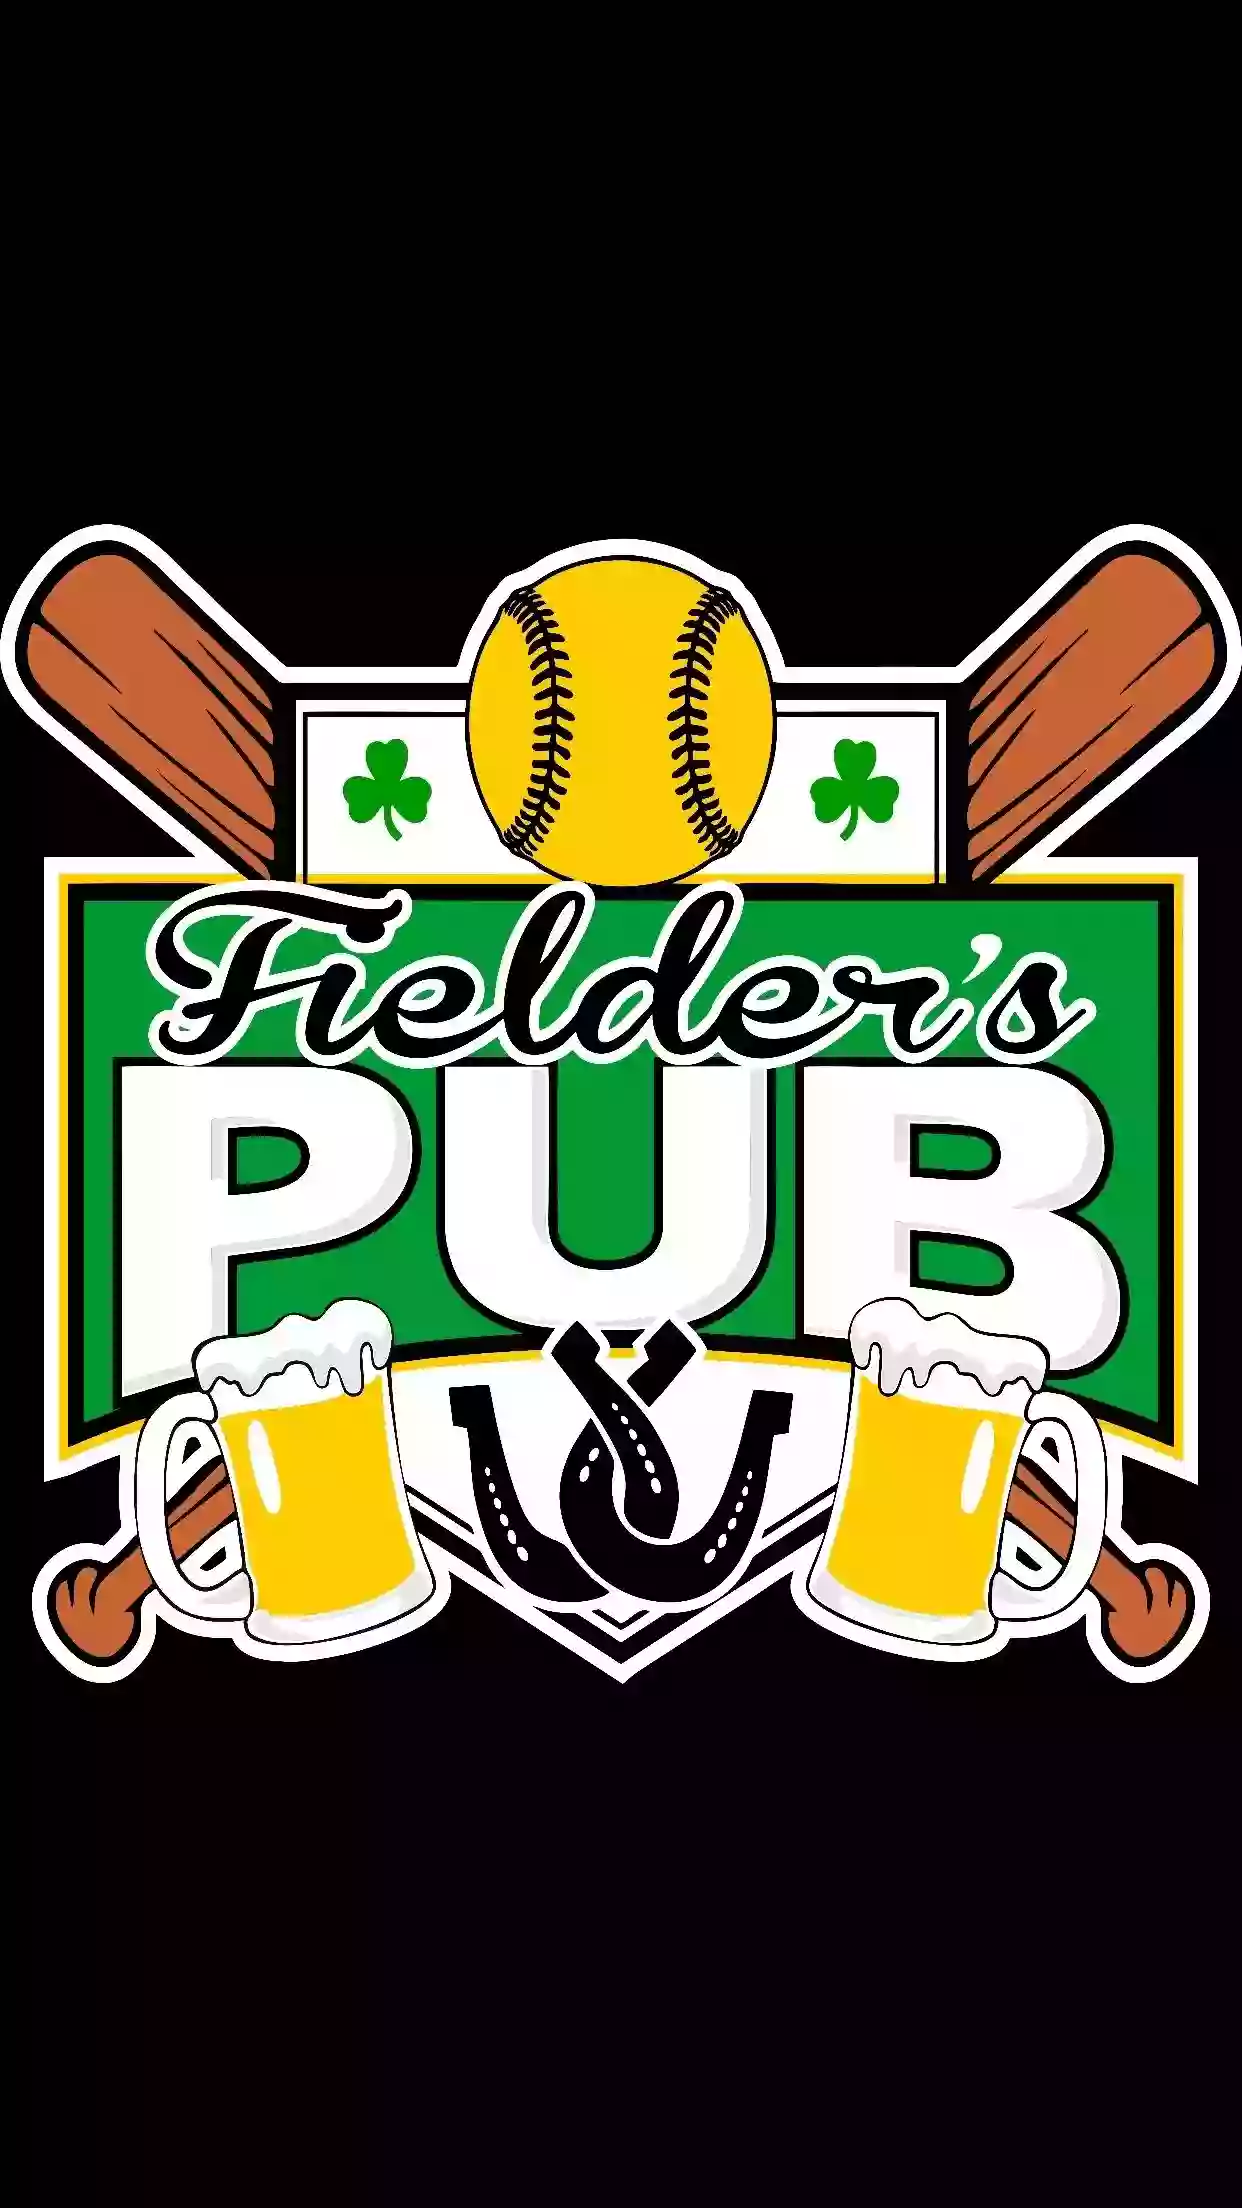 Fielder's Pub